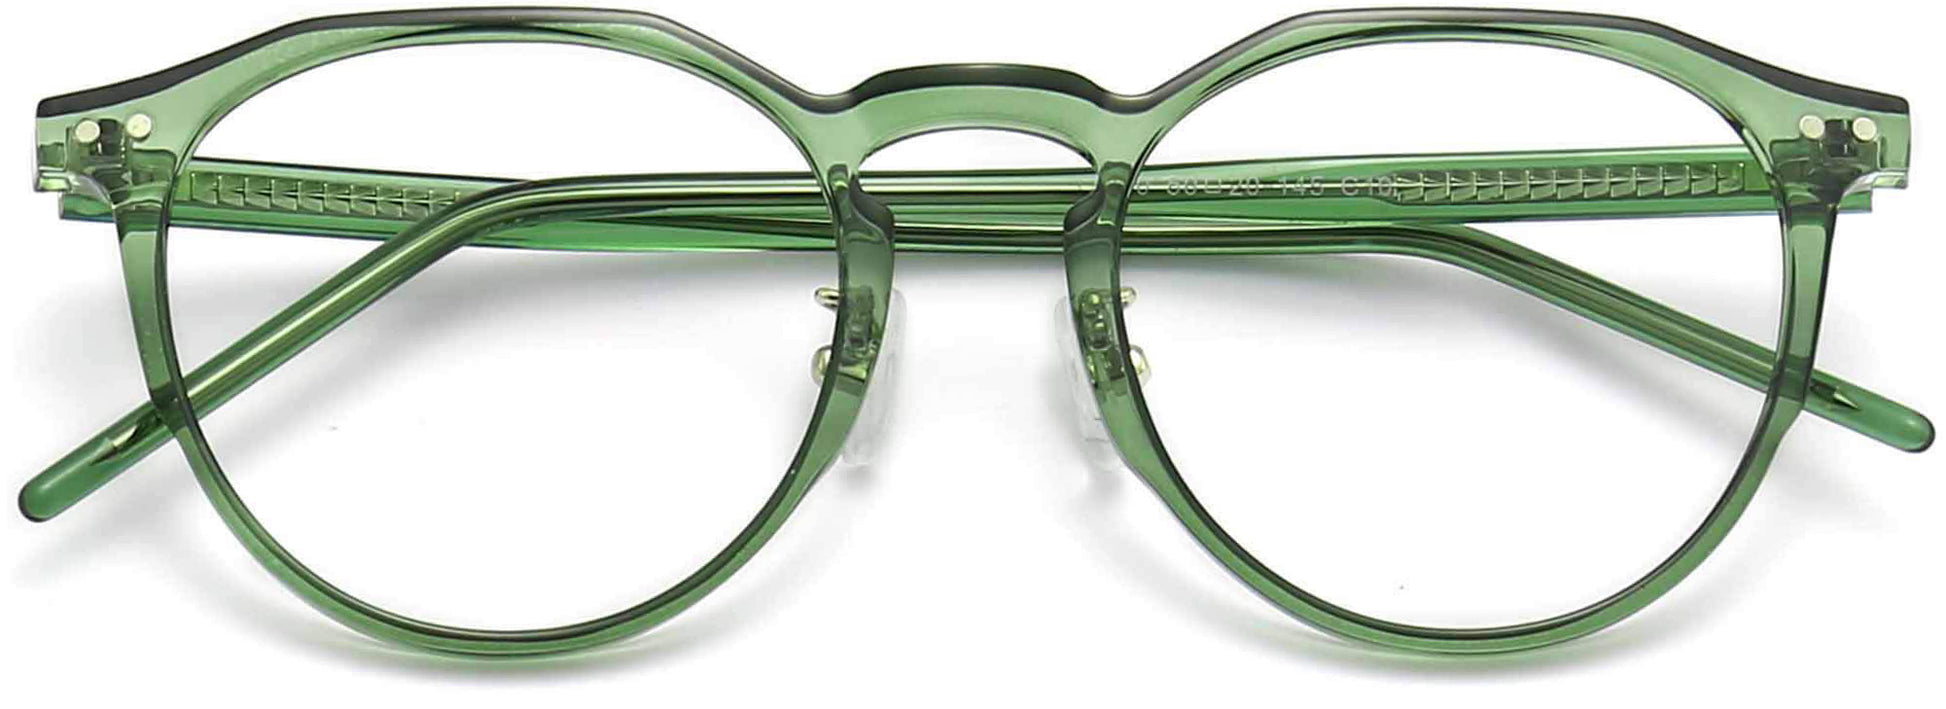 Matthew Geometric Green Eyeglasses from ANRRI, closed view